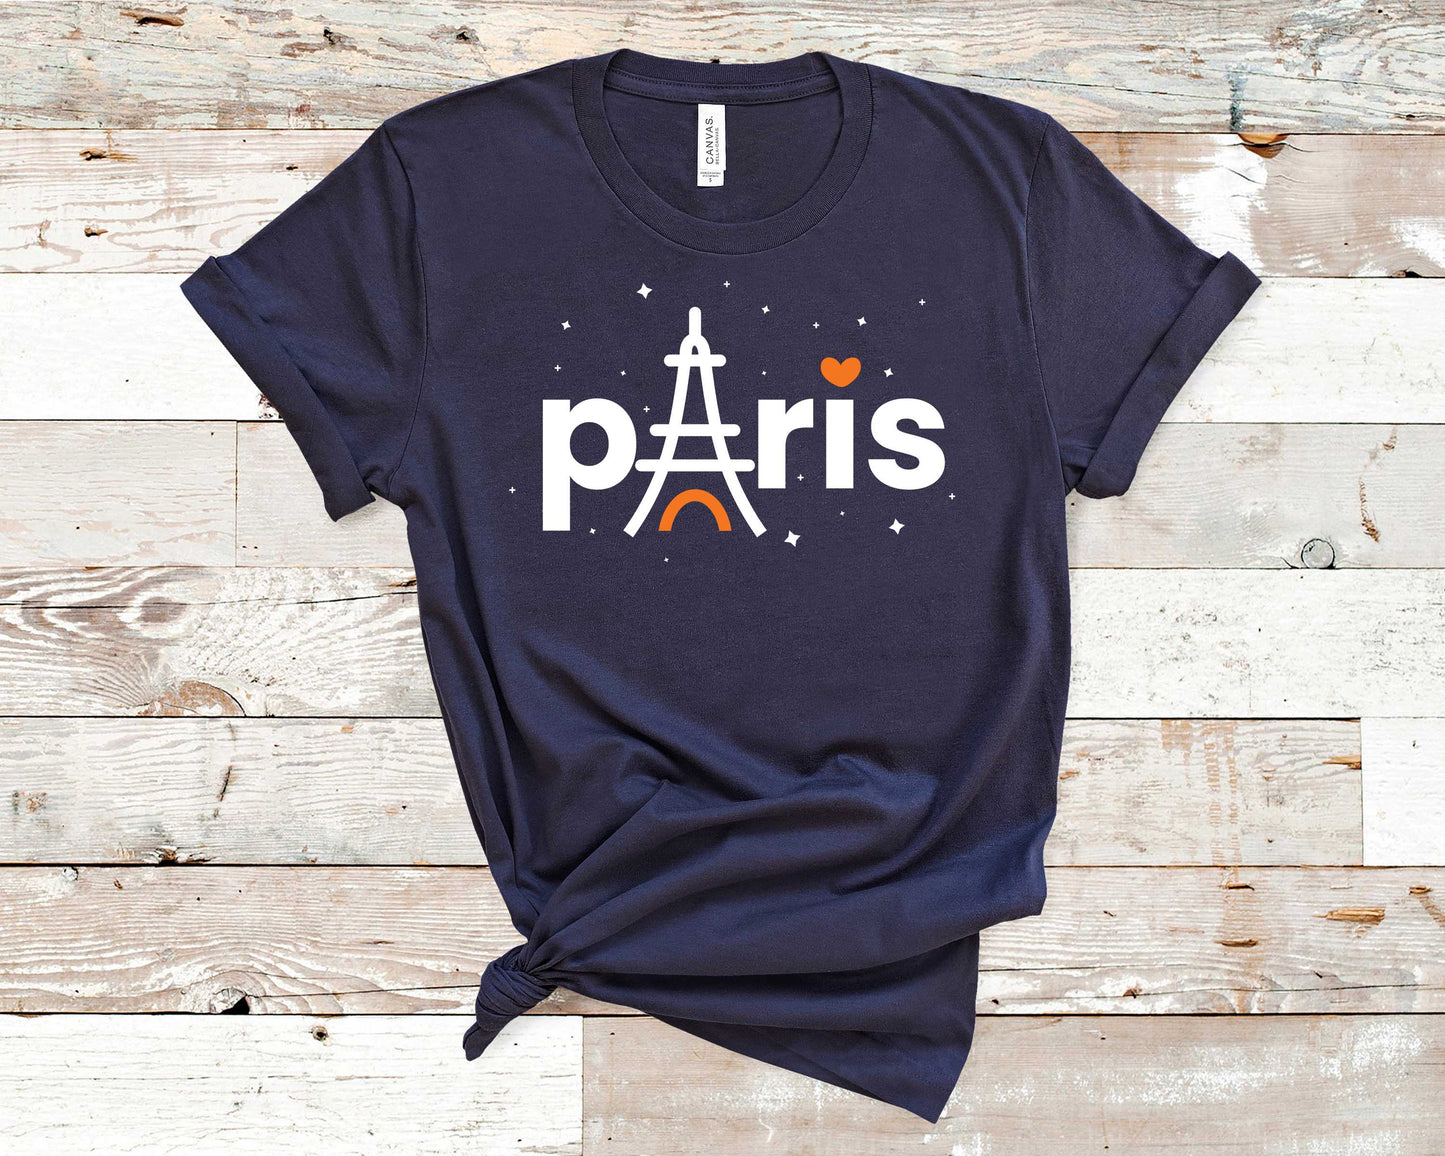 Paris - Travel/Vacation